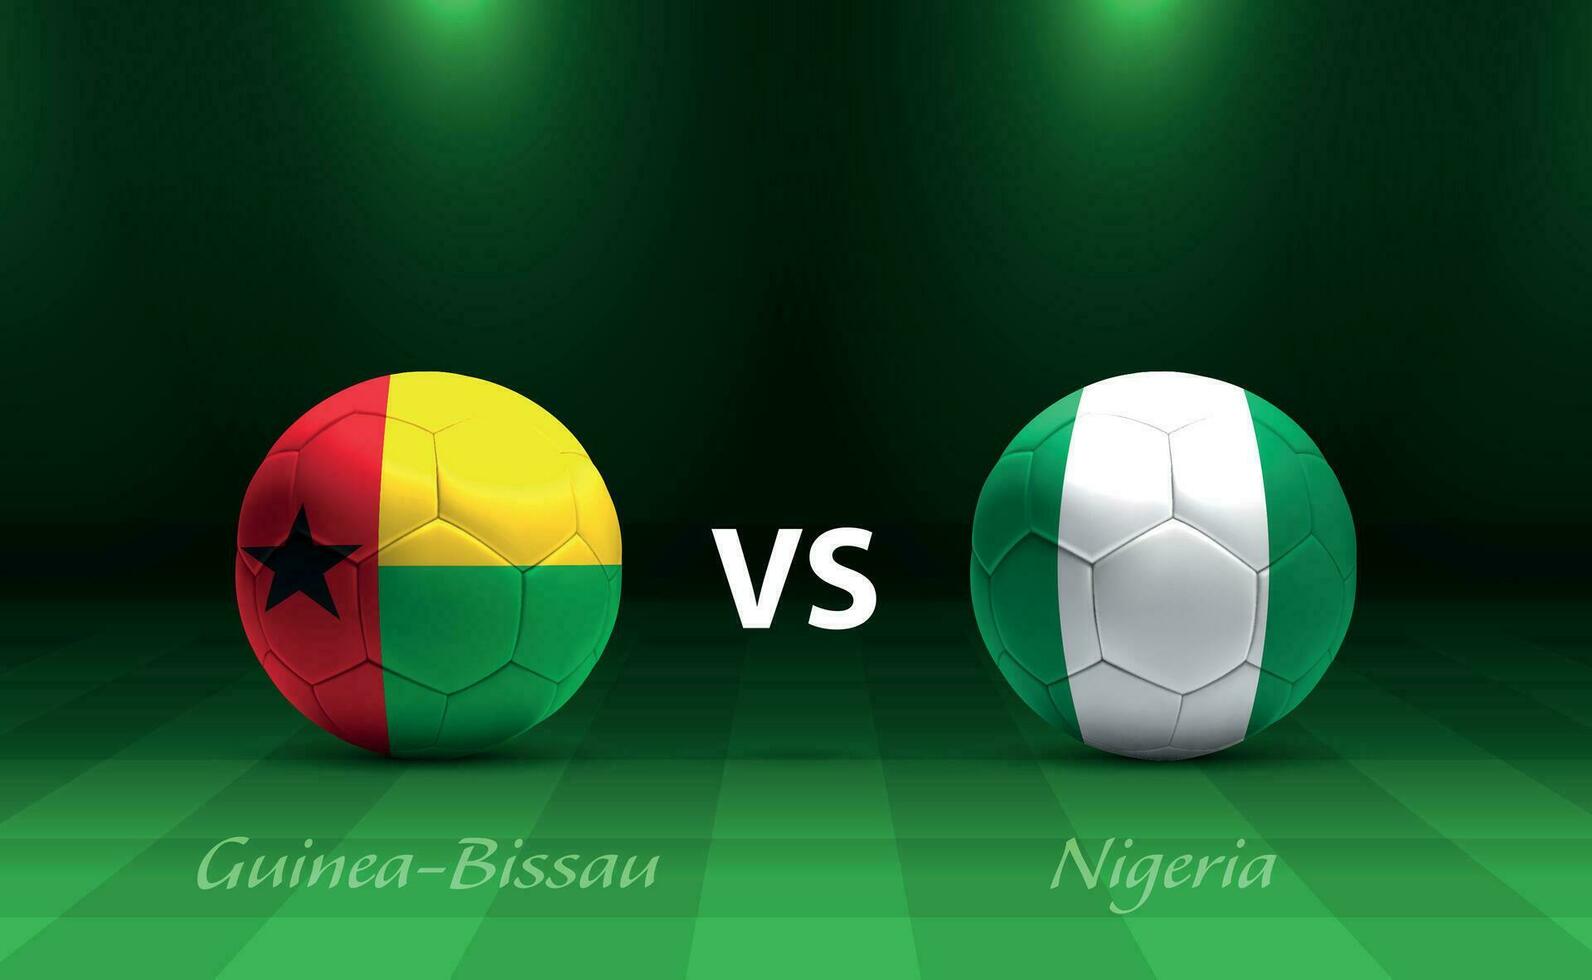 Guinea-Bissau vs  football scoreboard broadcast template vector